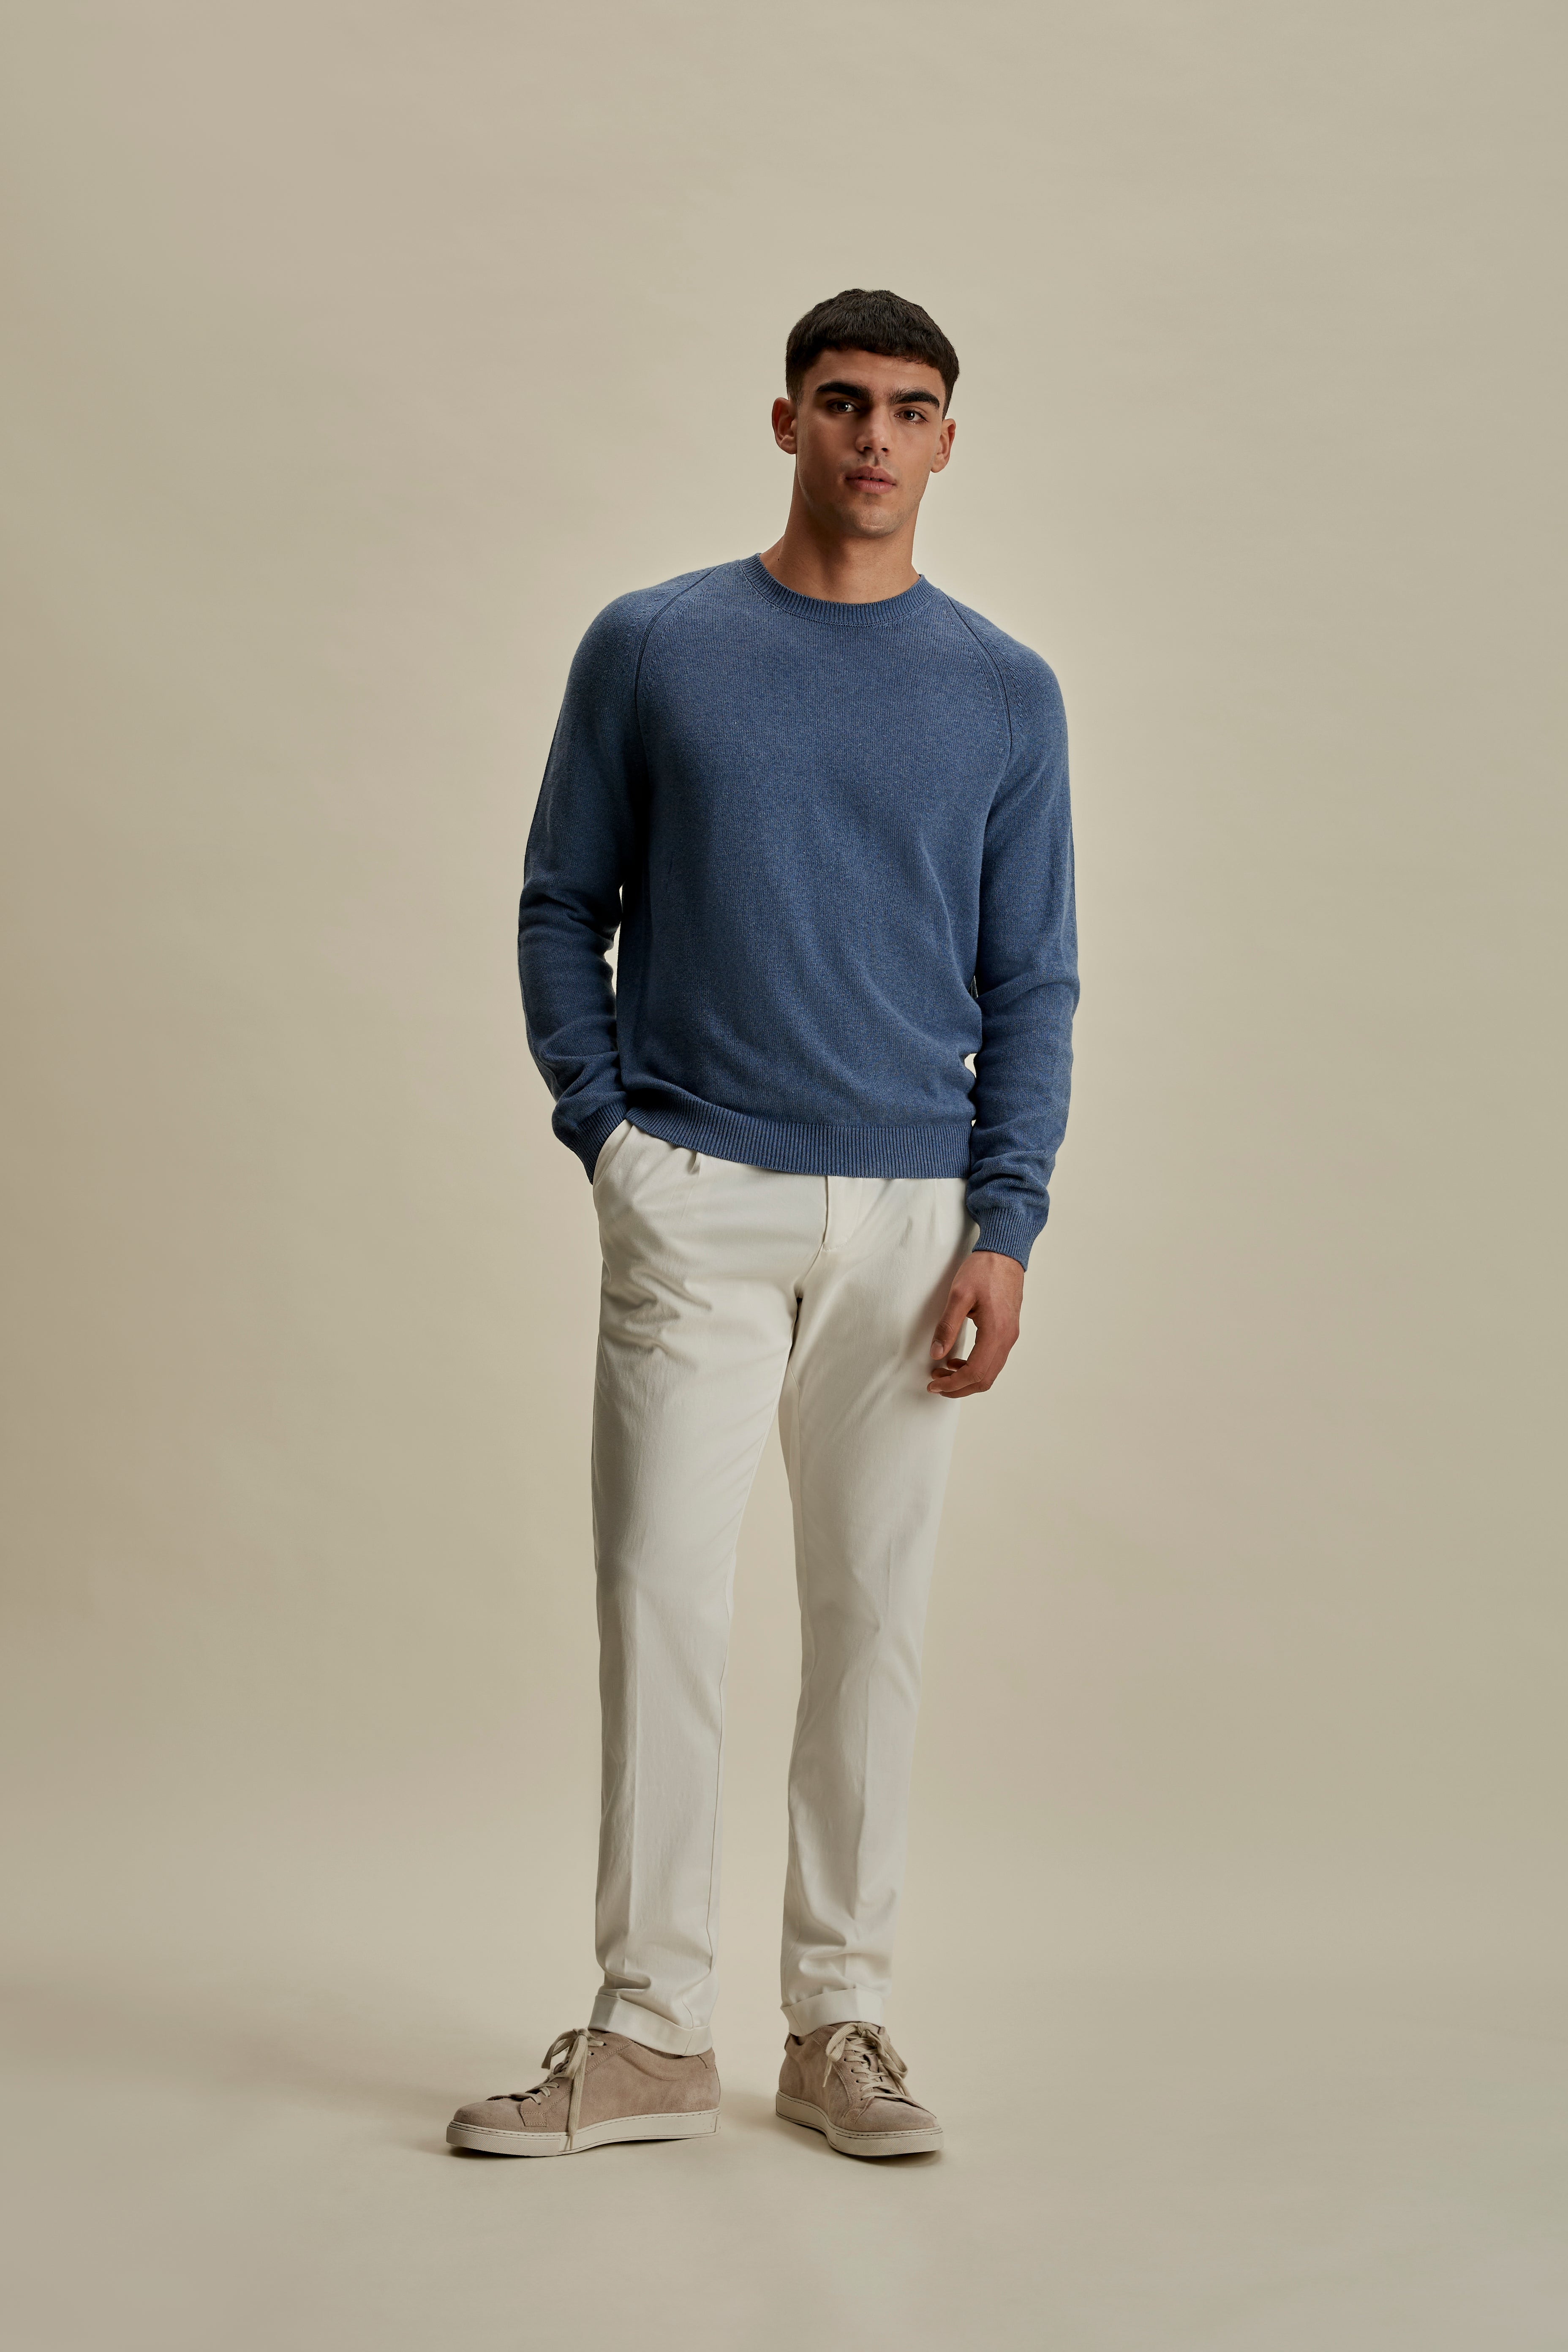 Cotton Raglan Crew Neck Sweater Denim Full Length  Model Image